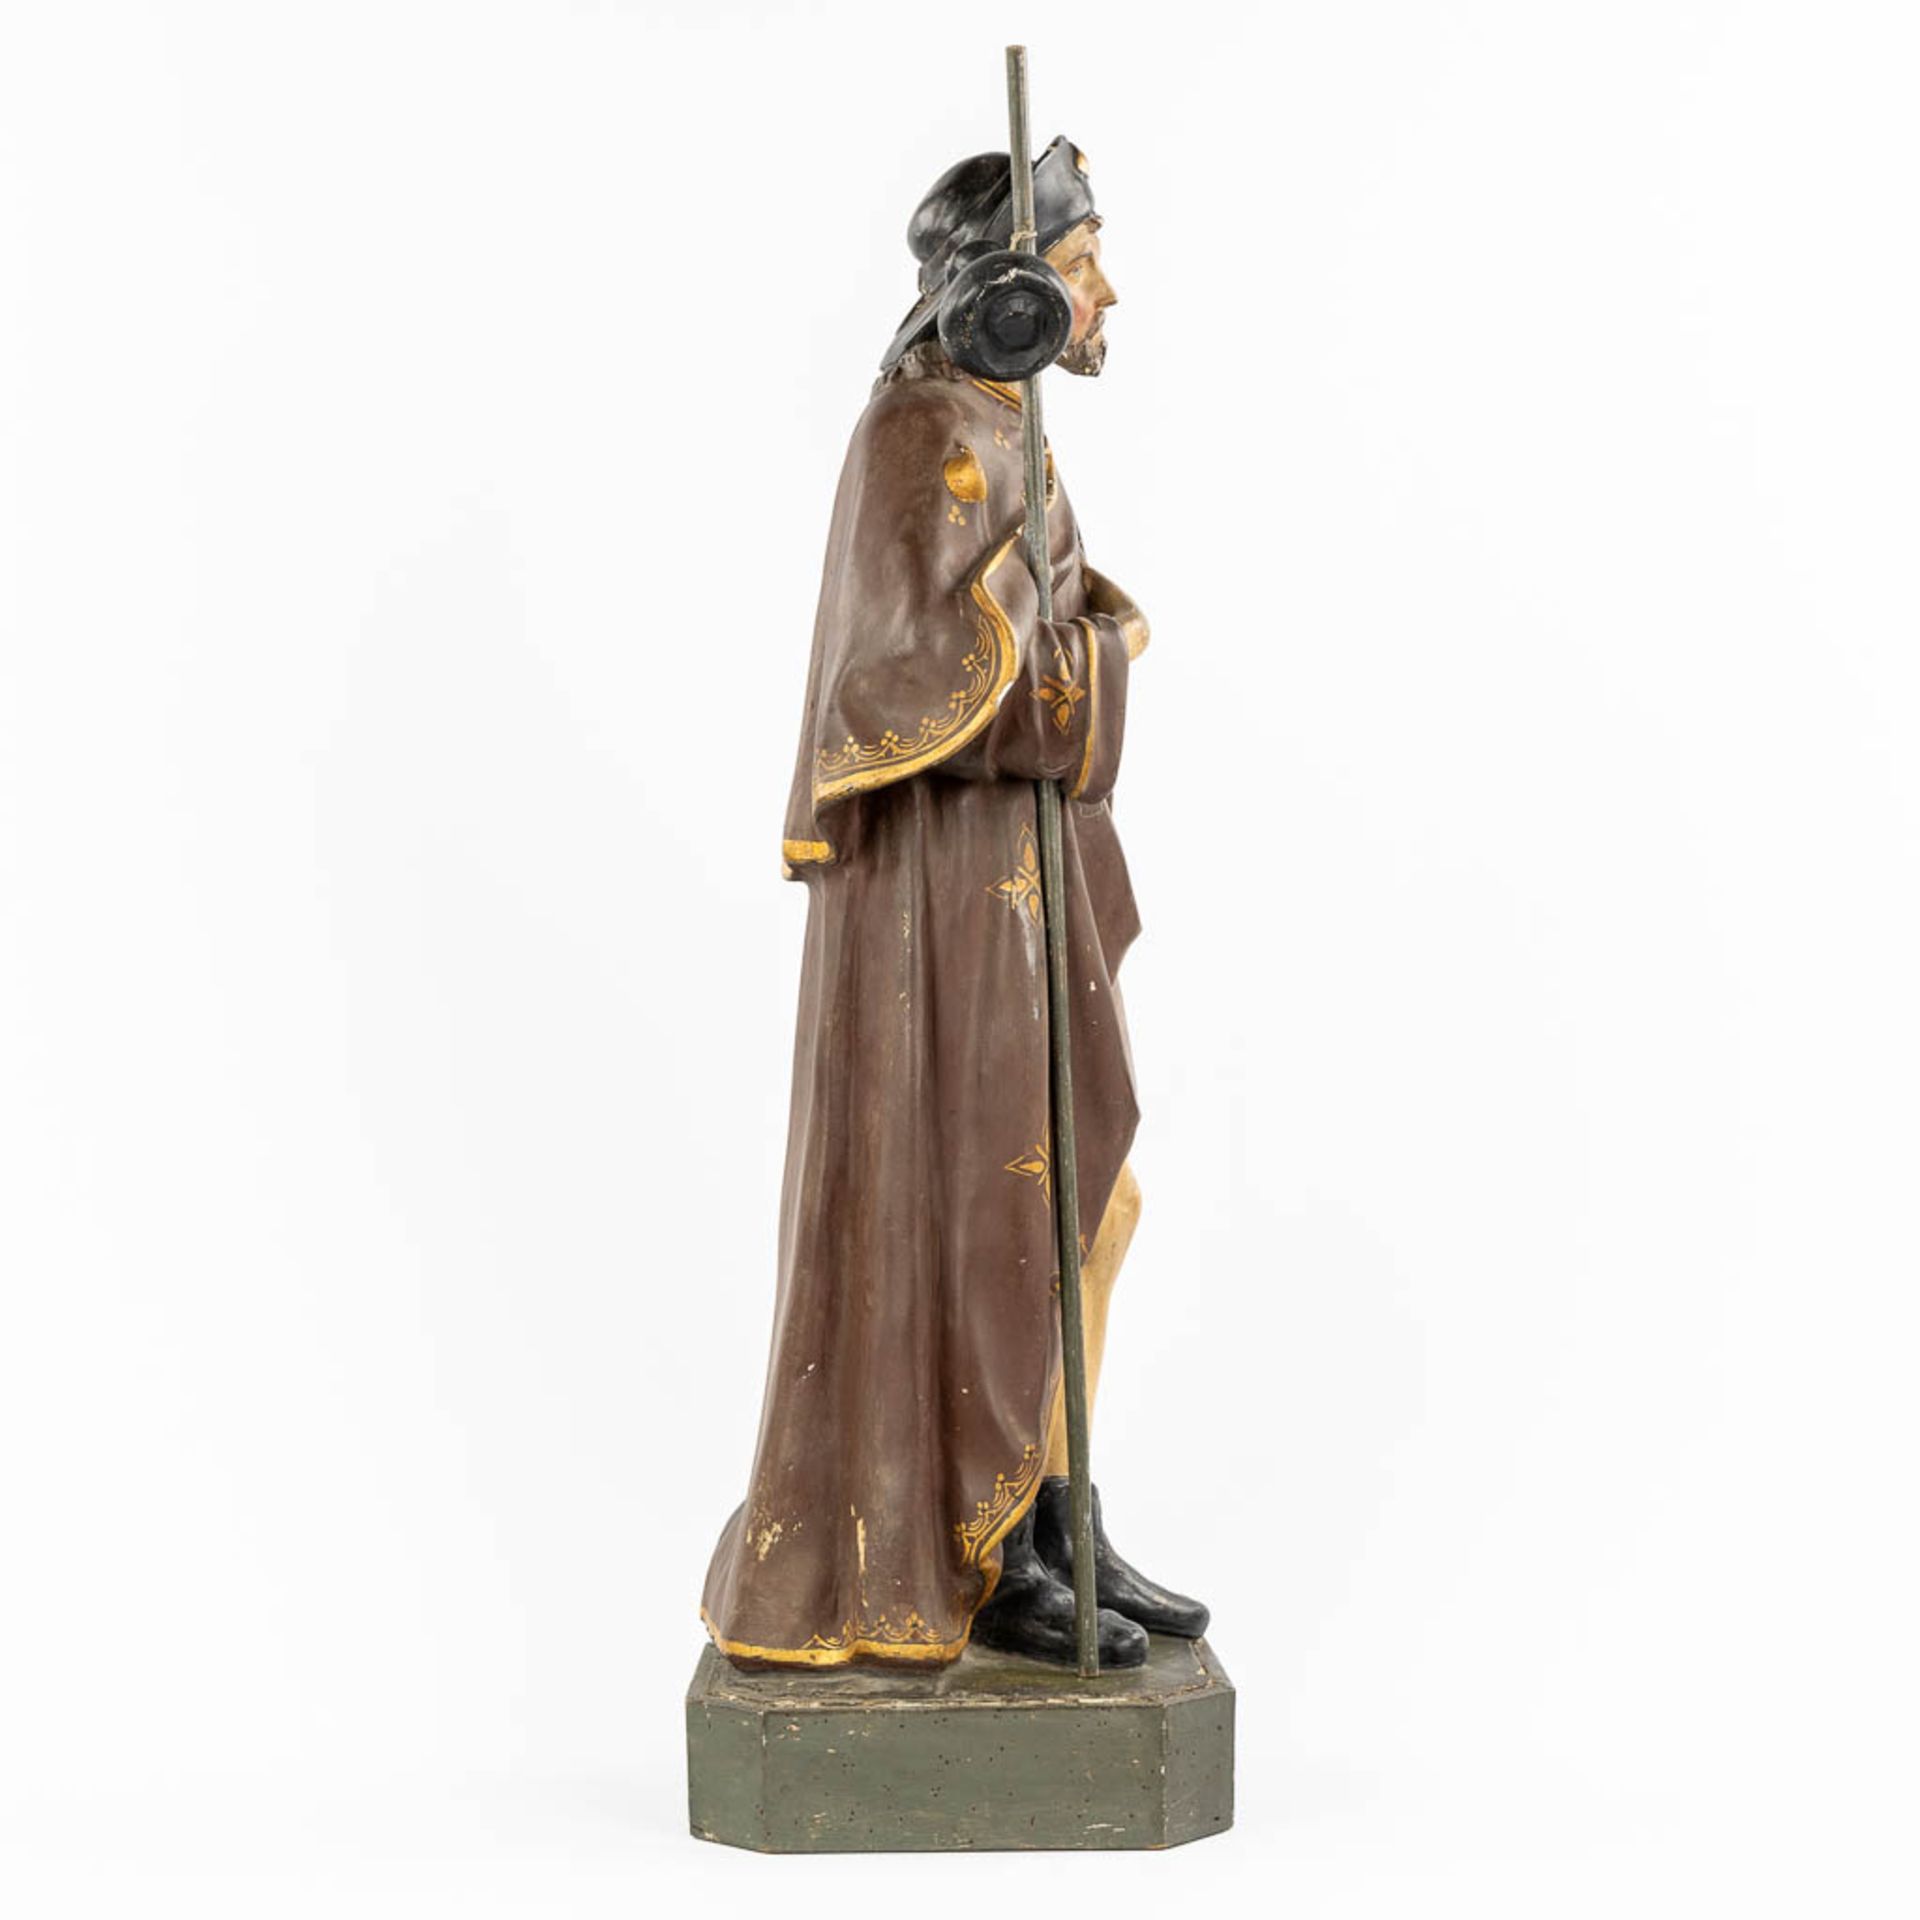 An antique figurine of Saint Rochus, patinated plaster. Circa 1900. (L:27 x W:27 x H:88 cm) - Image 6 of 16